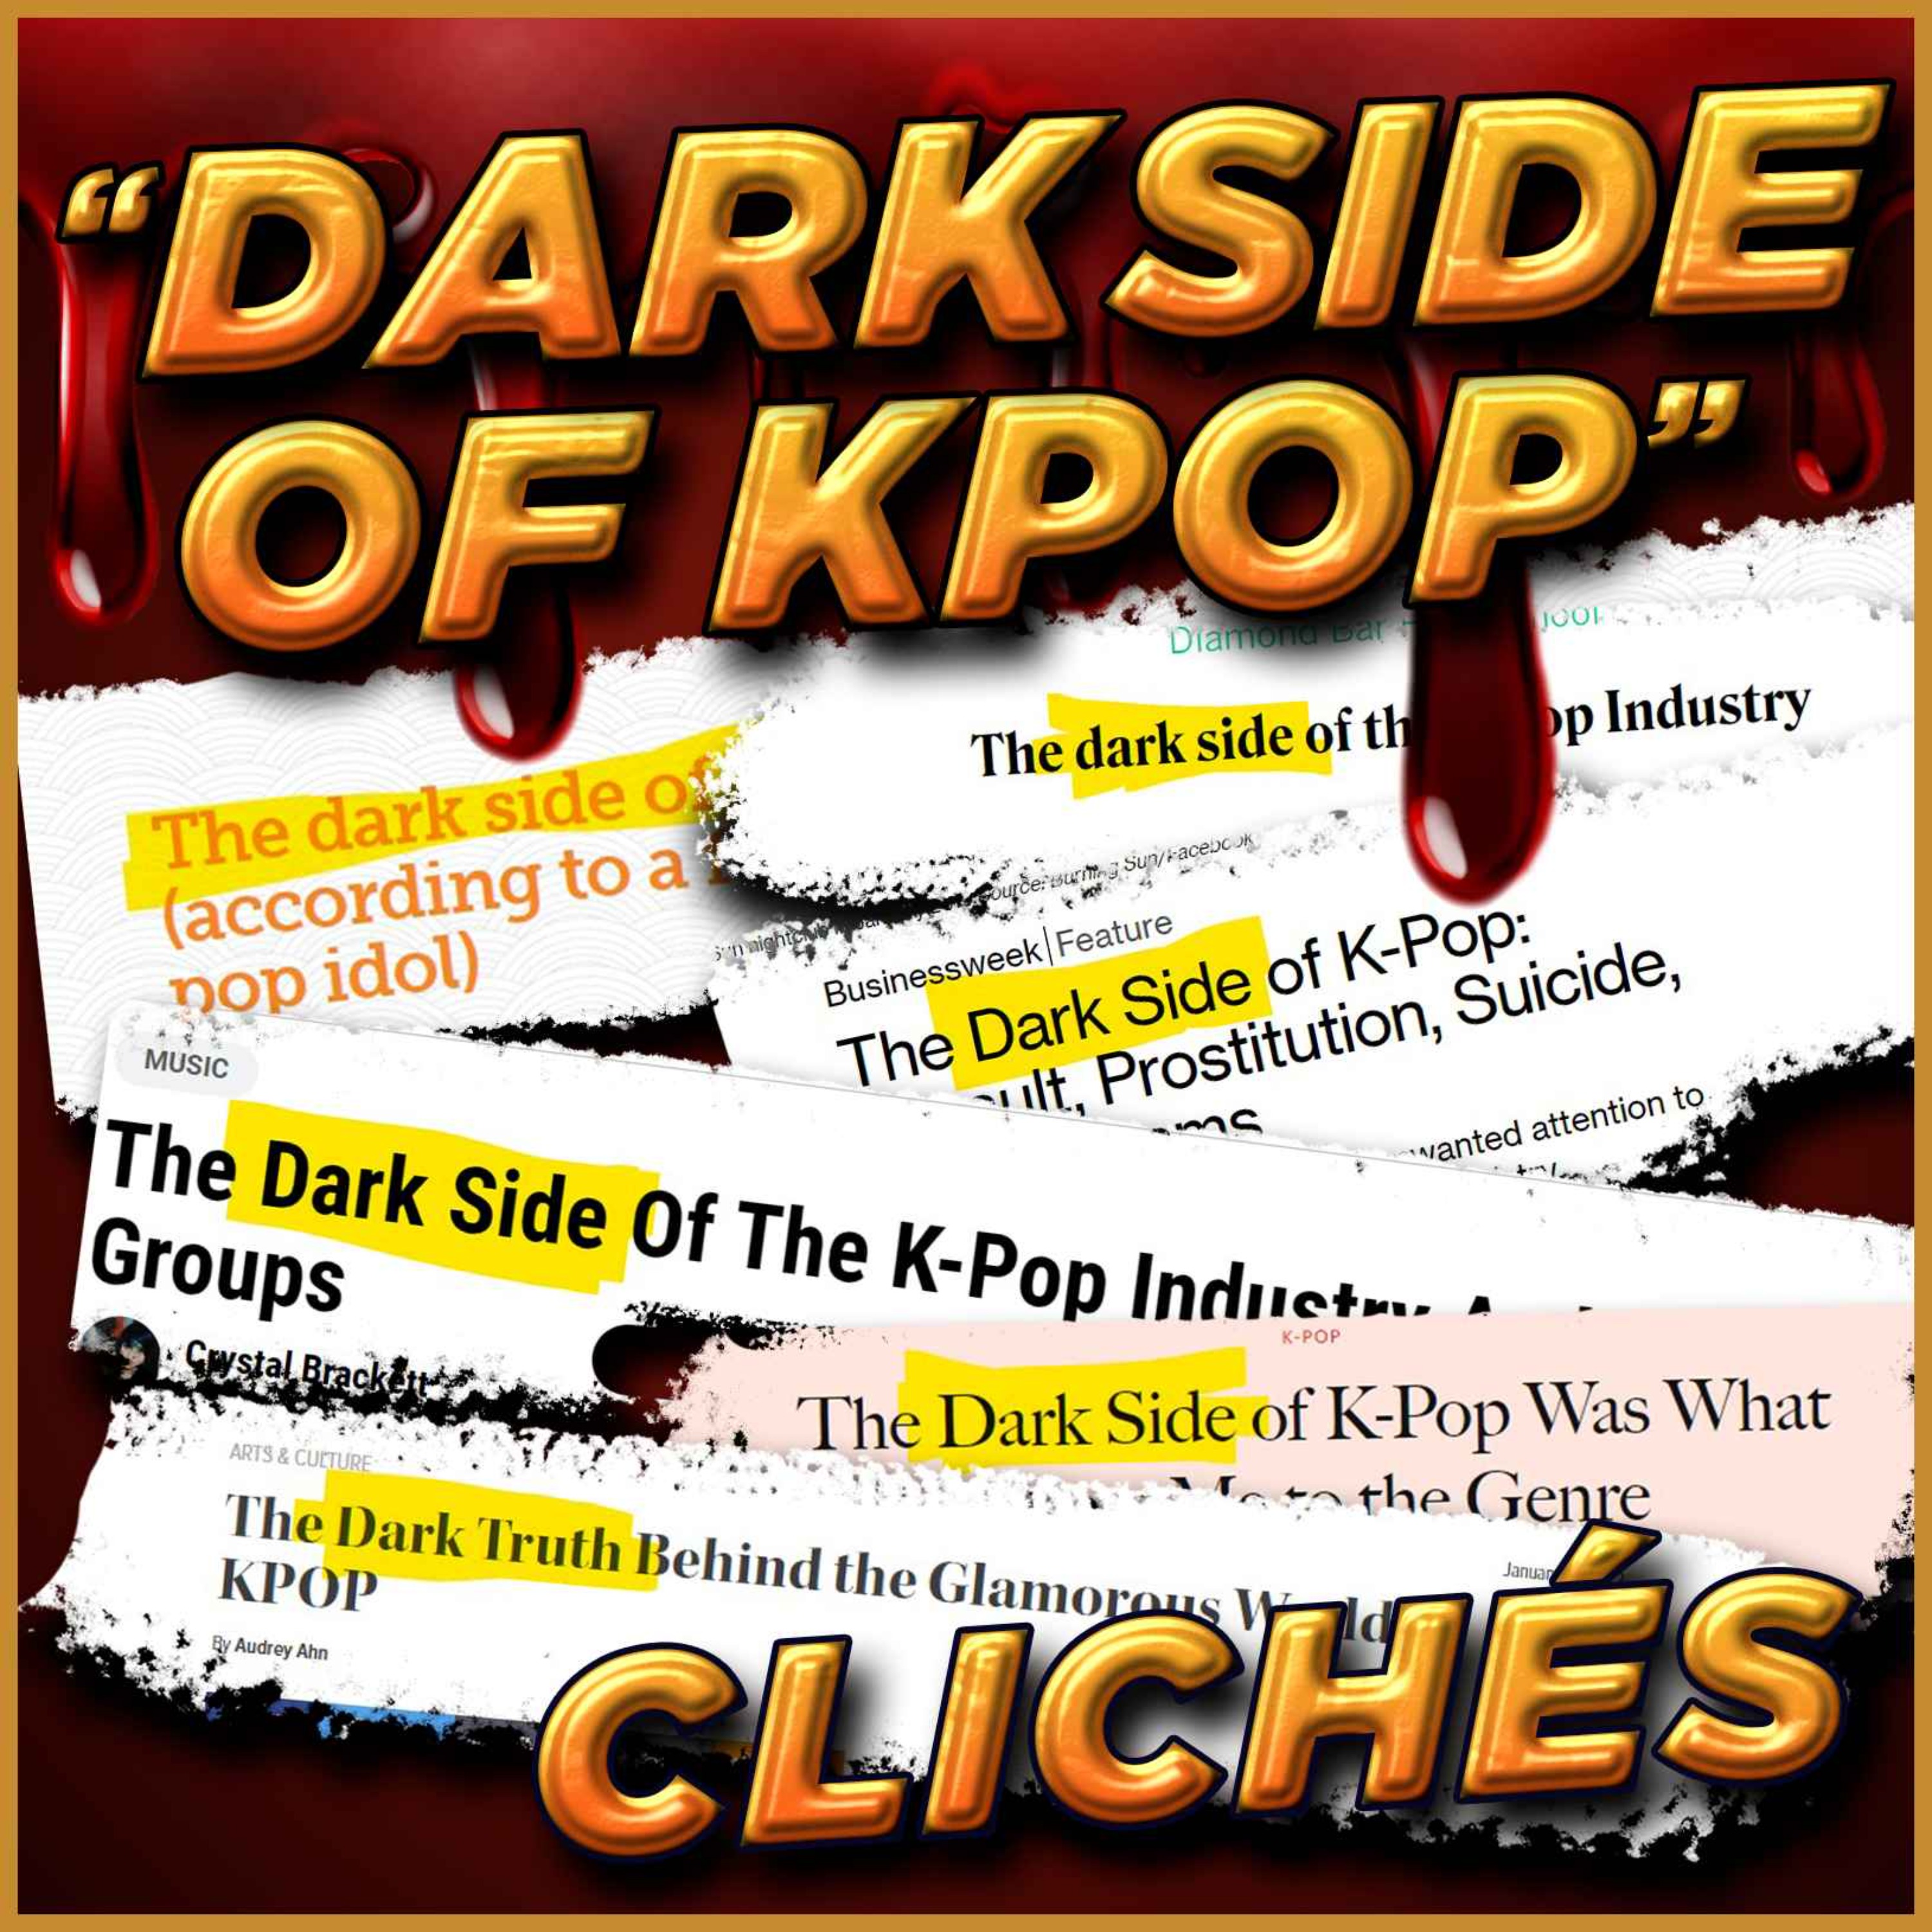 The ”Dark Side of Kpop” Clichés